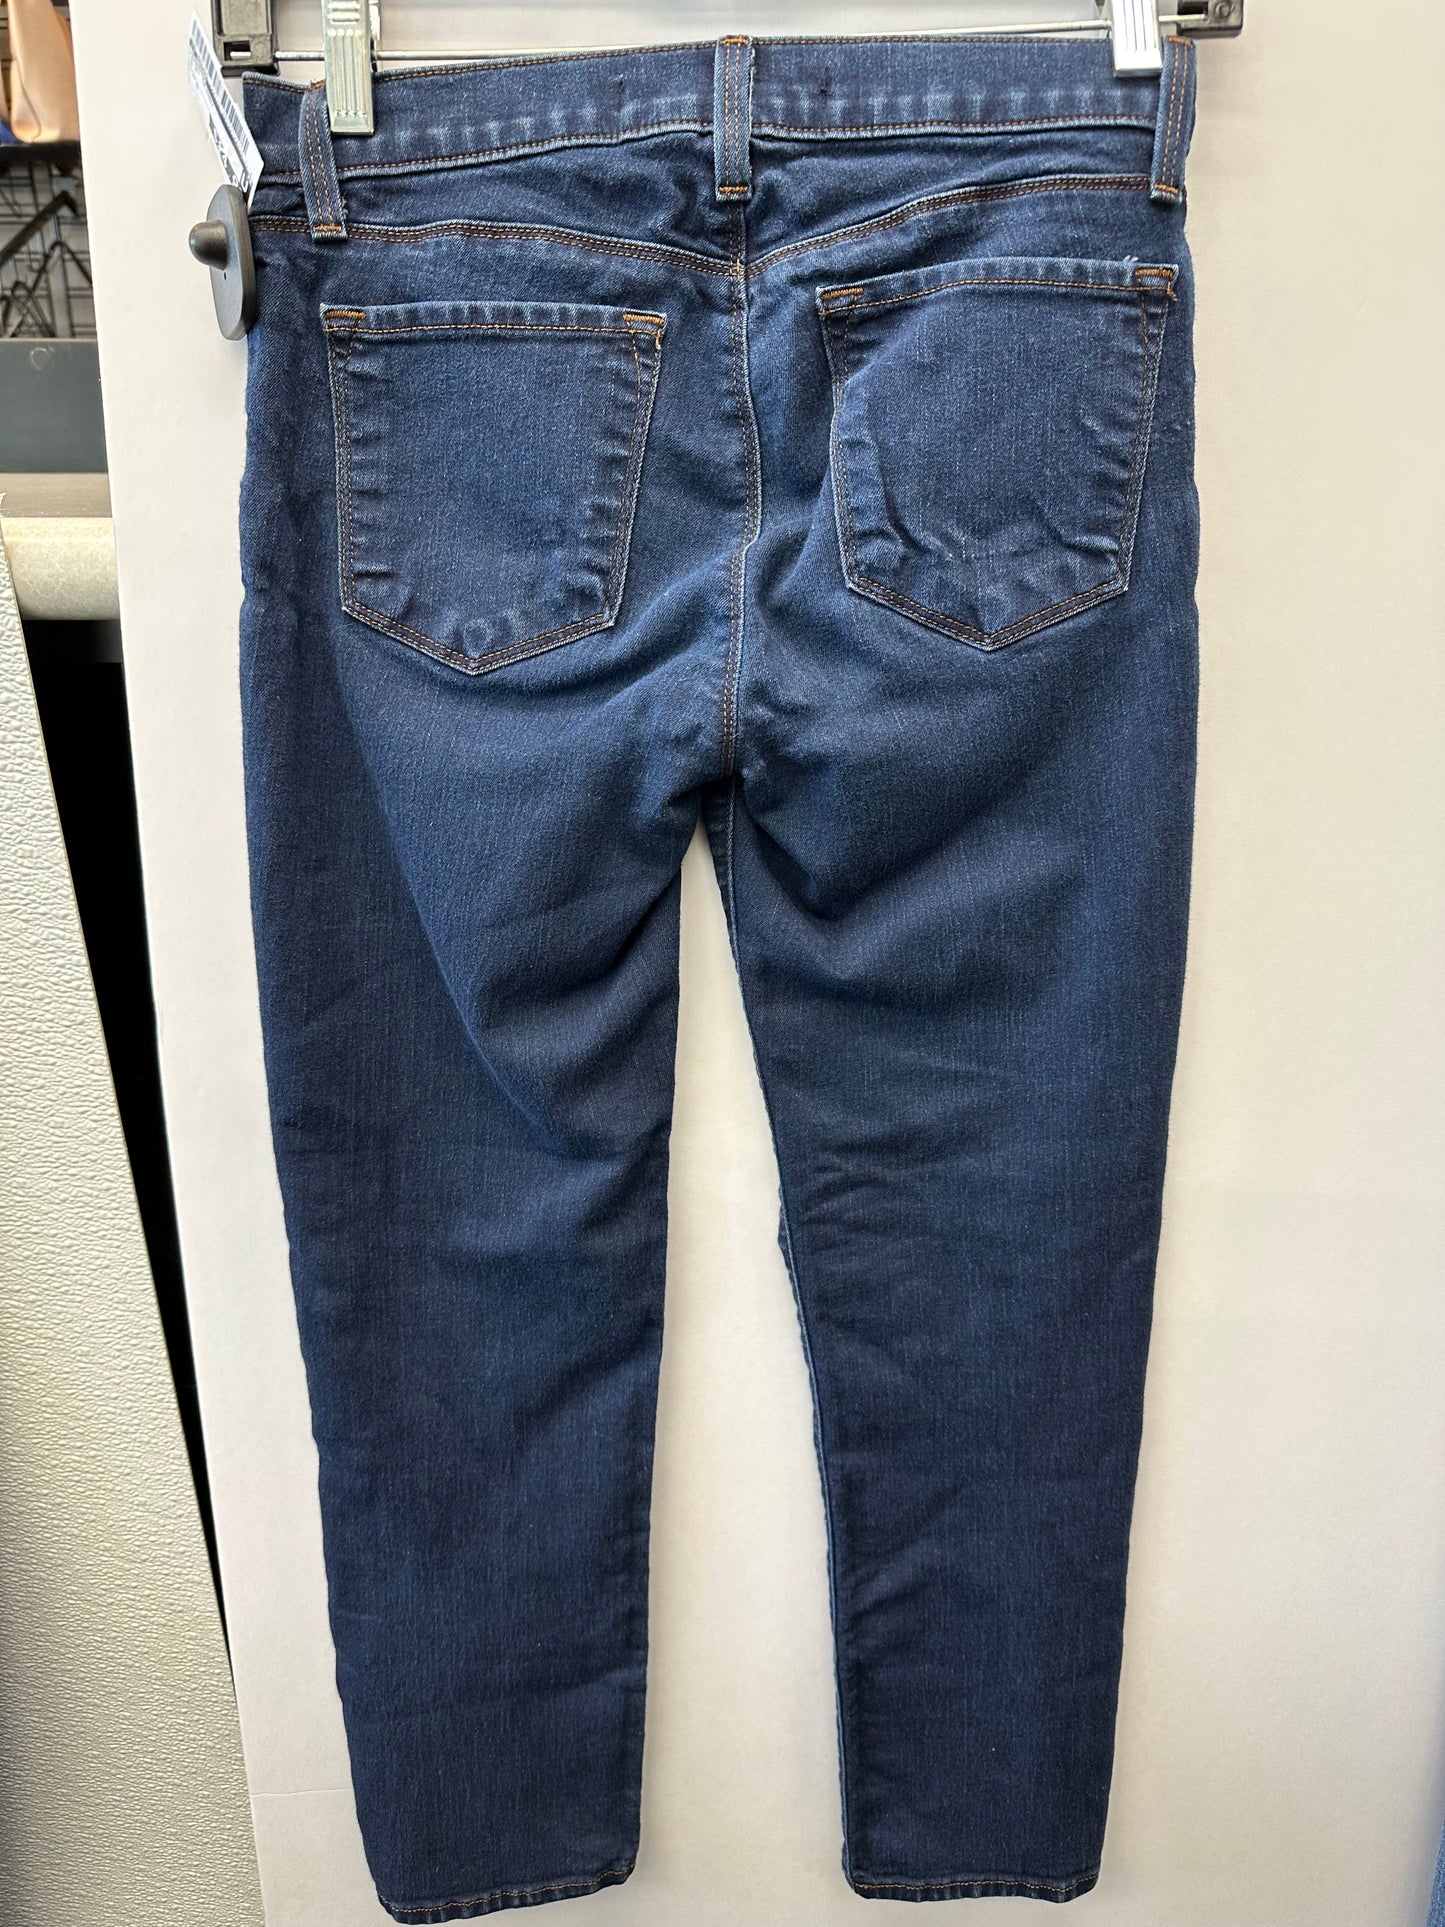 Jeans Skinny By J Brand  Size: 0